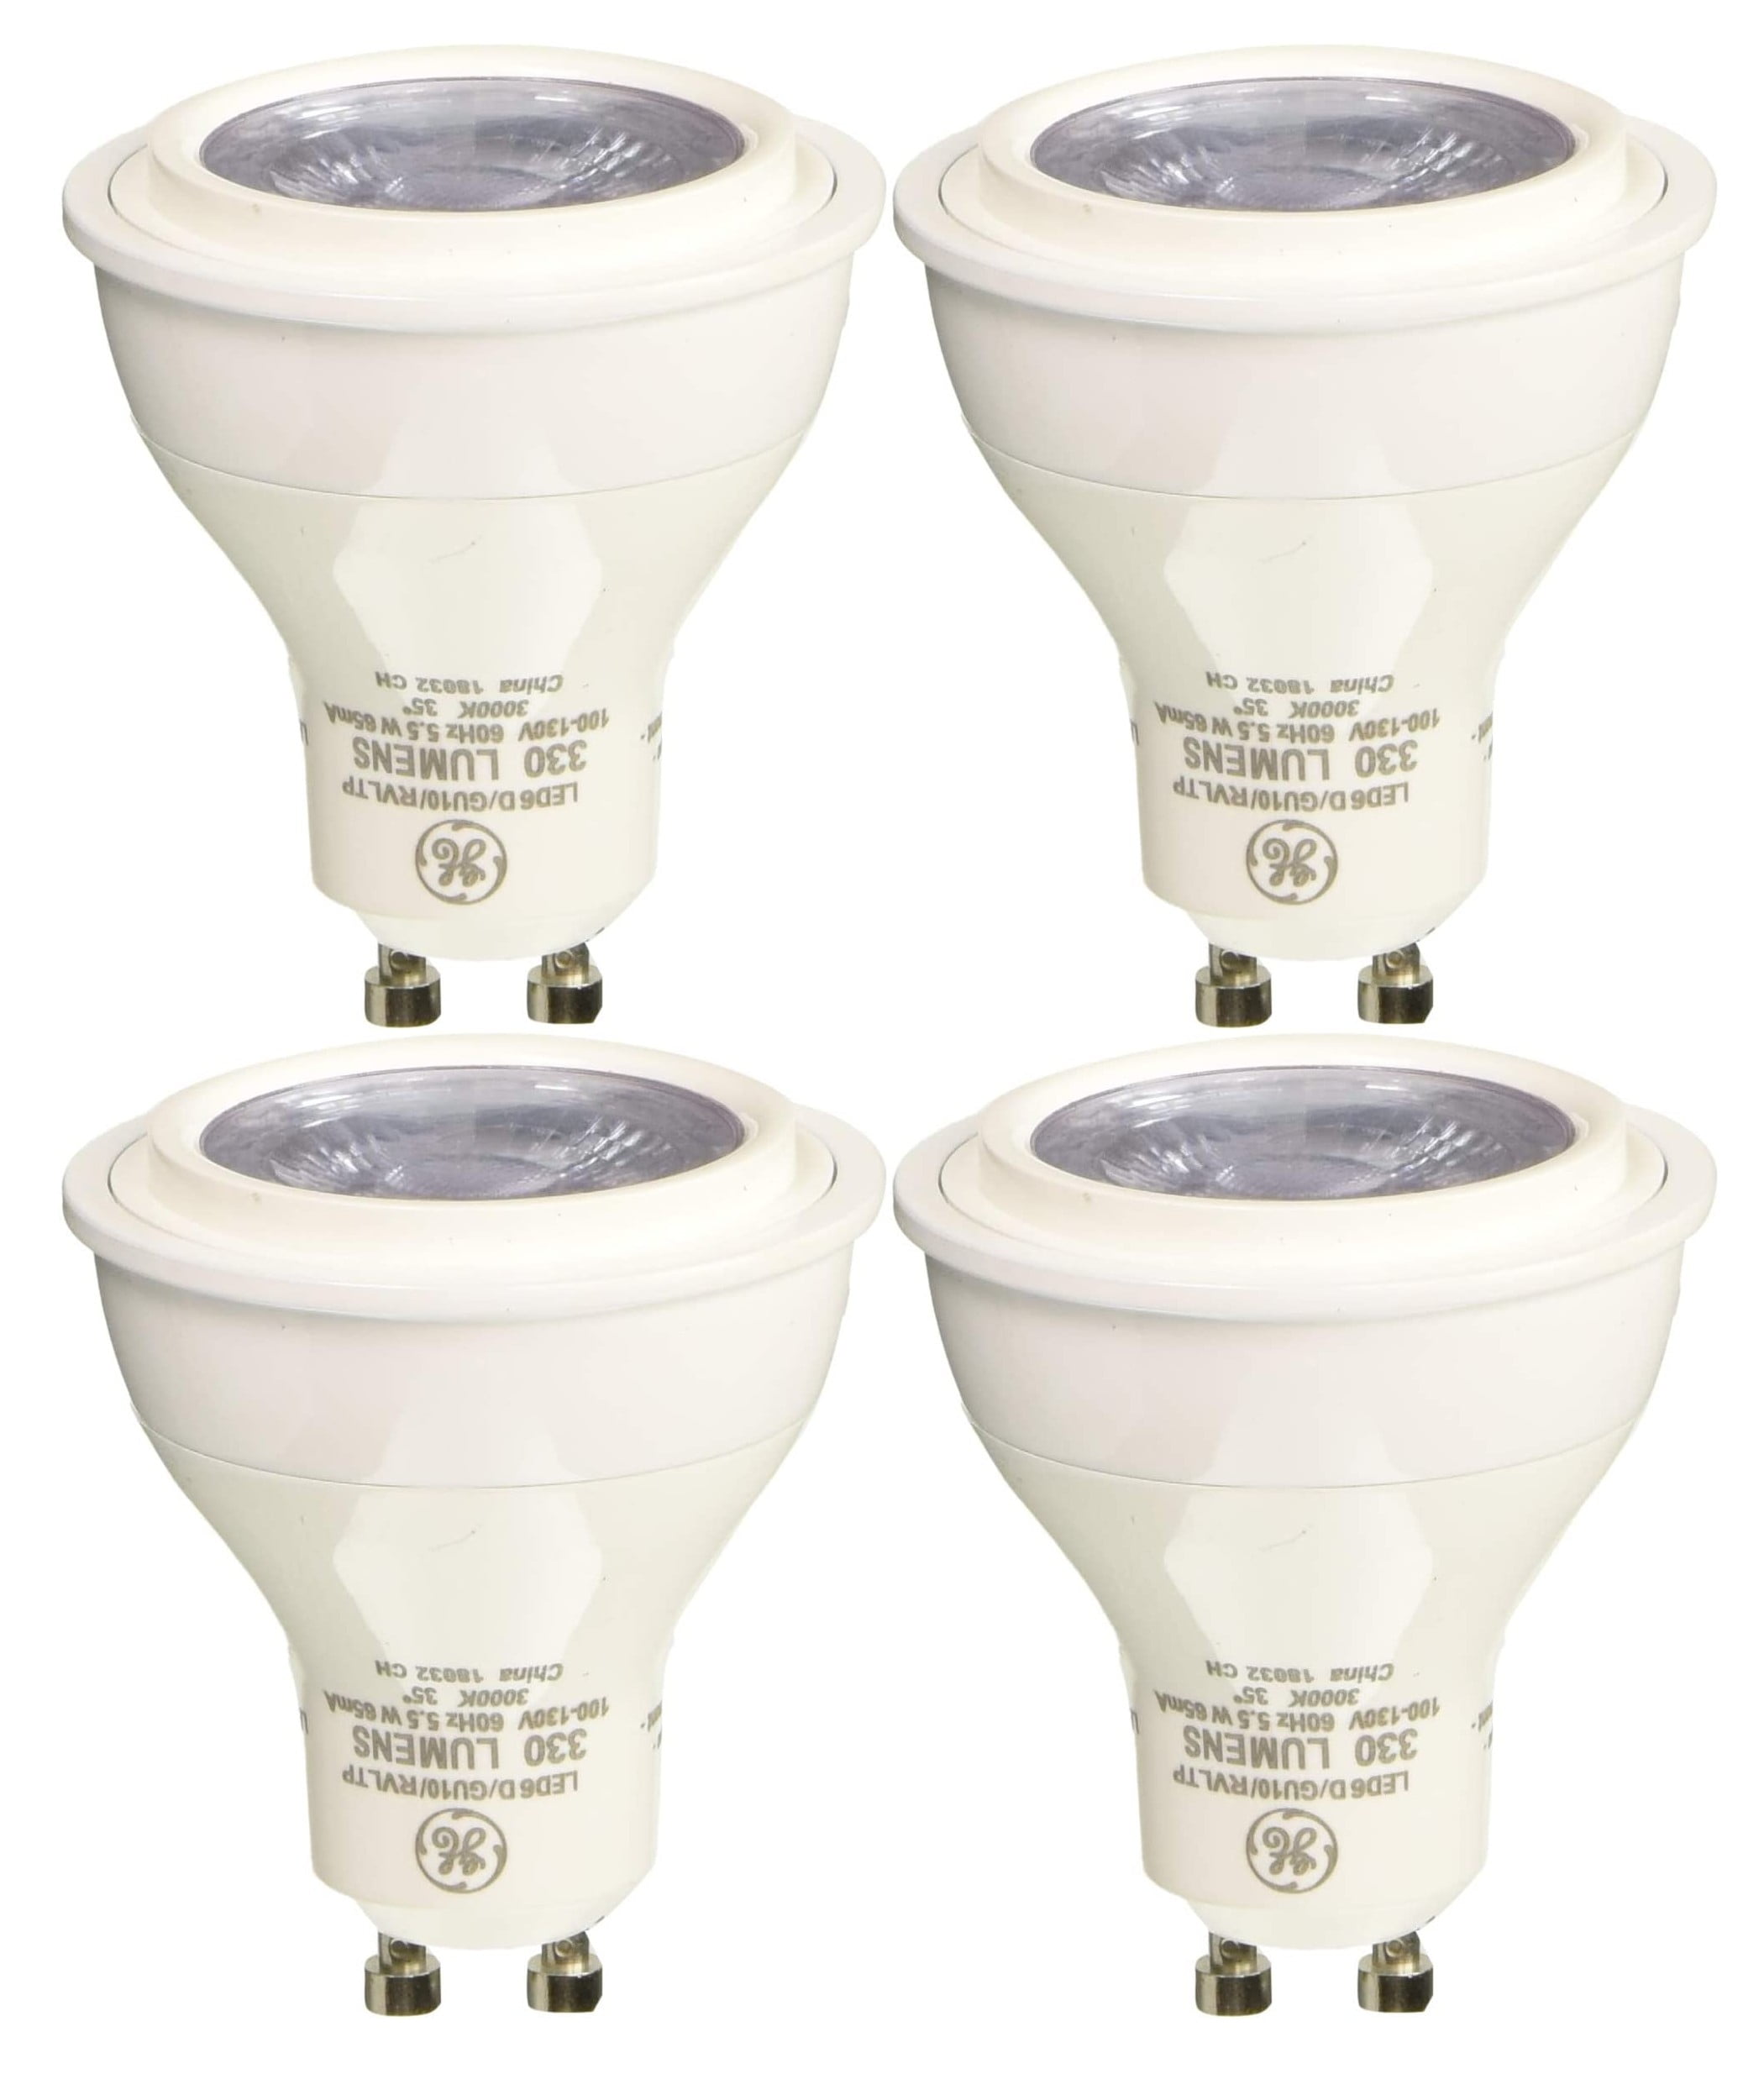 redactioneel Aanklager Opgetild 4 bulbs) GE Lighting 35684 reveal LED 5.5-watt (50-watt Replacement),  330-lumen MR16 Light Bulb with GU10 Base - Walmart.com